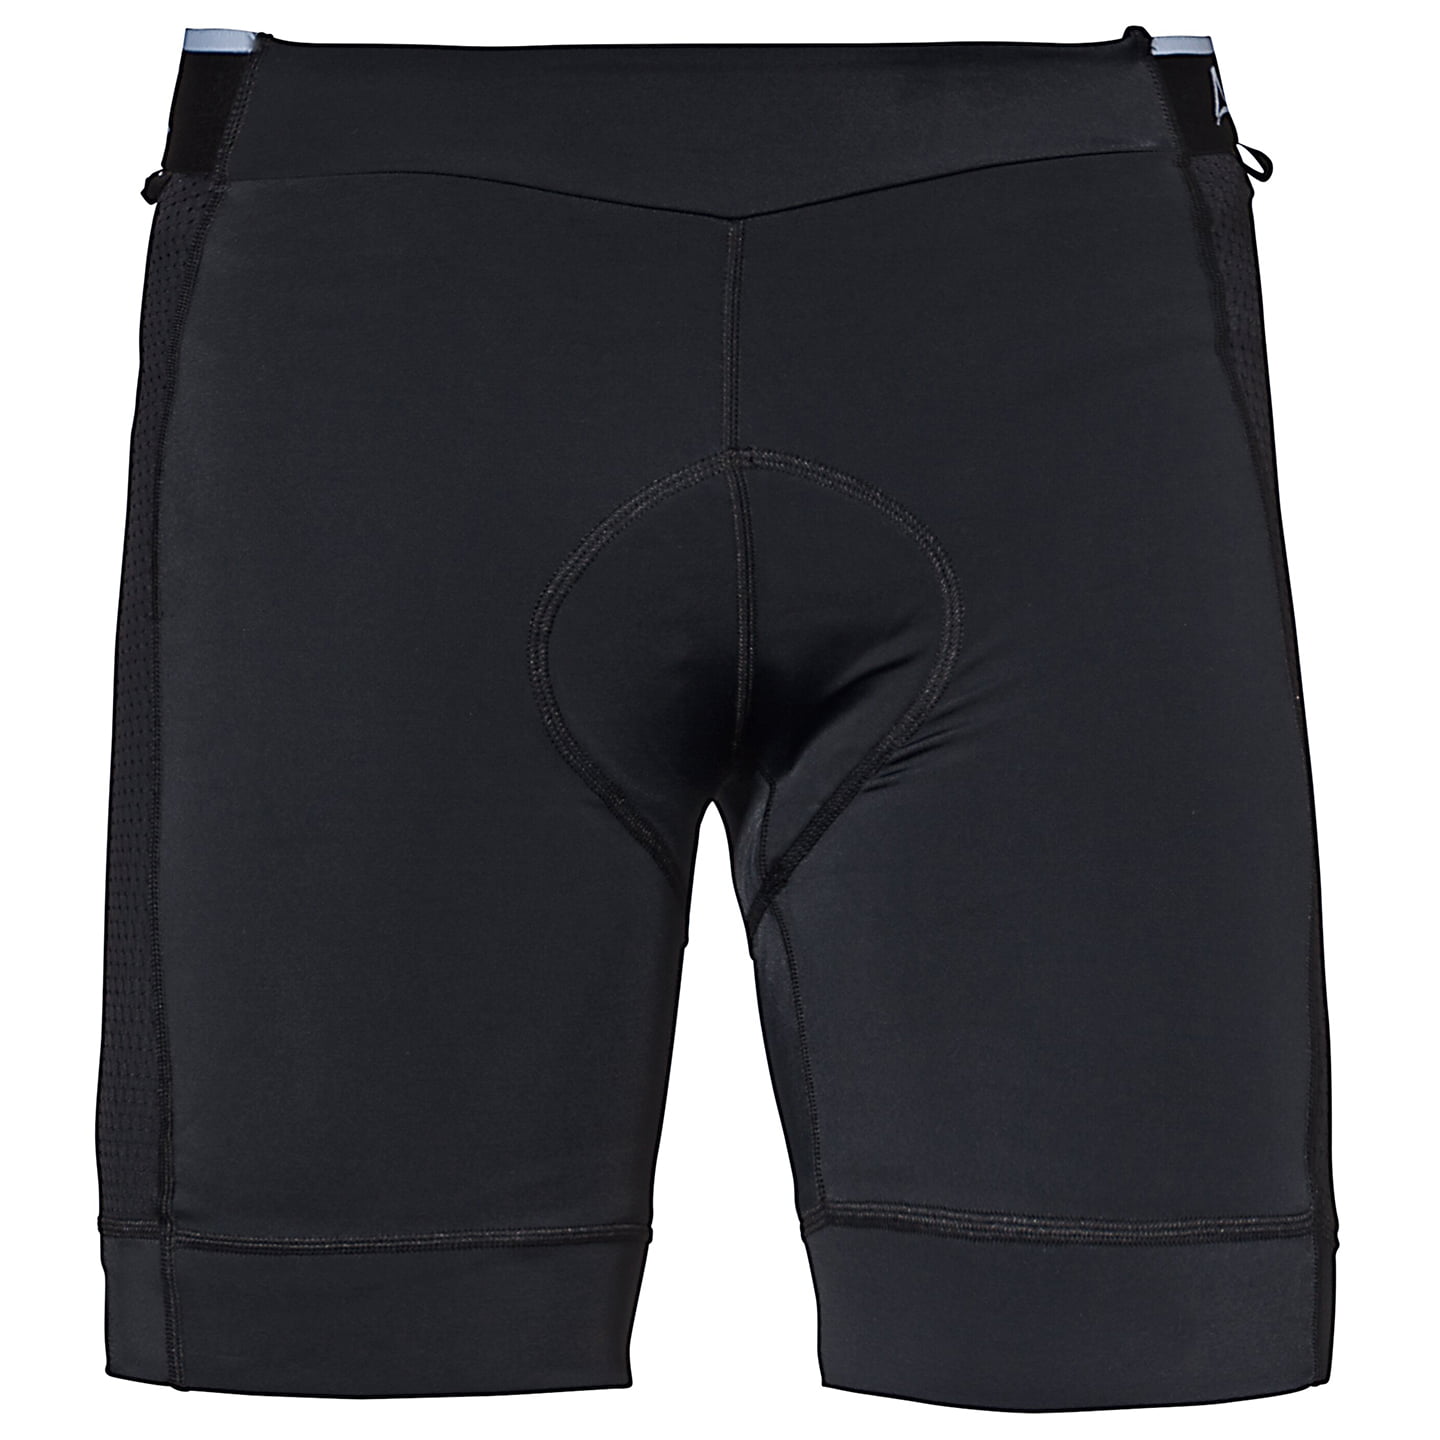 SCHOFFEL Skin Pants 4h Liner Shorts, for men, size 54